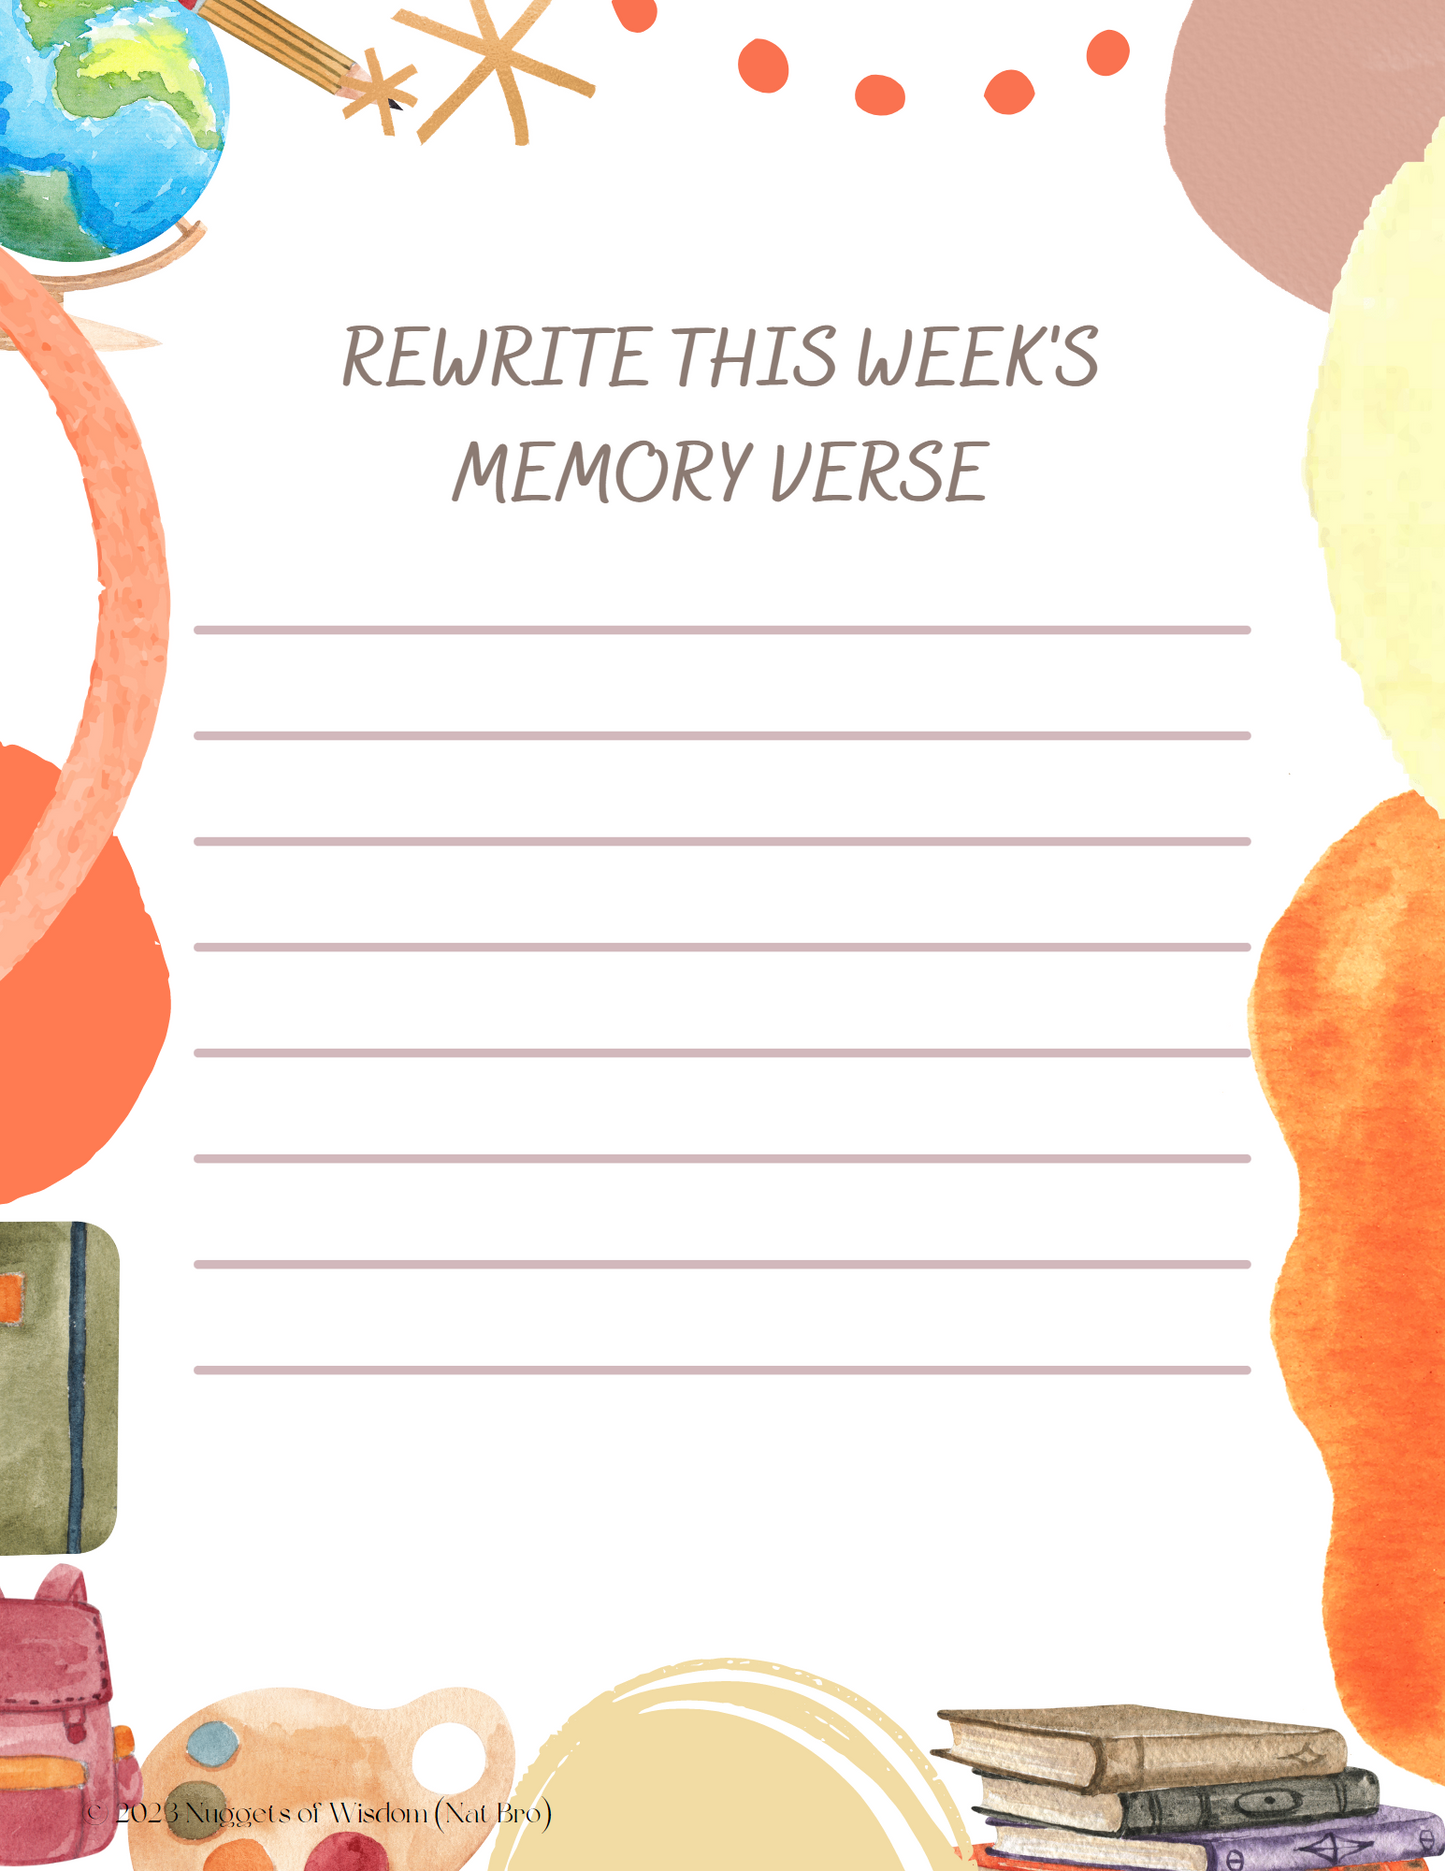 52-Week Memory Verse Activity Book